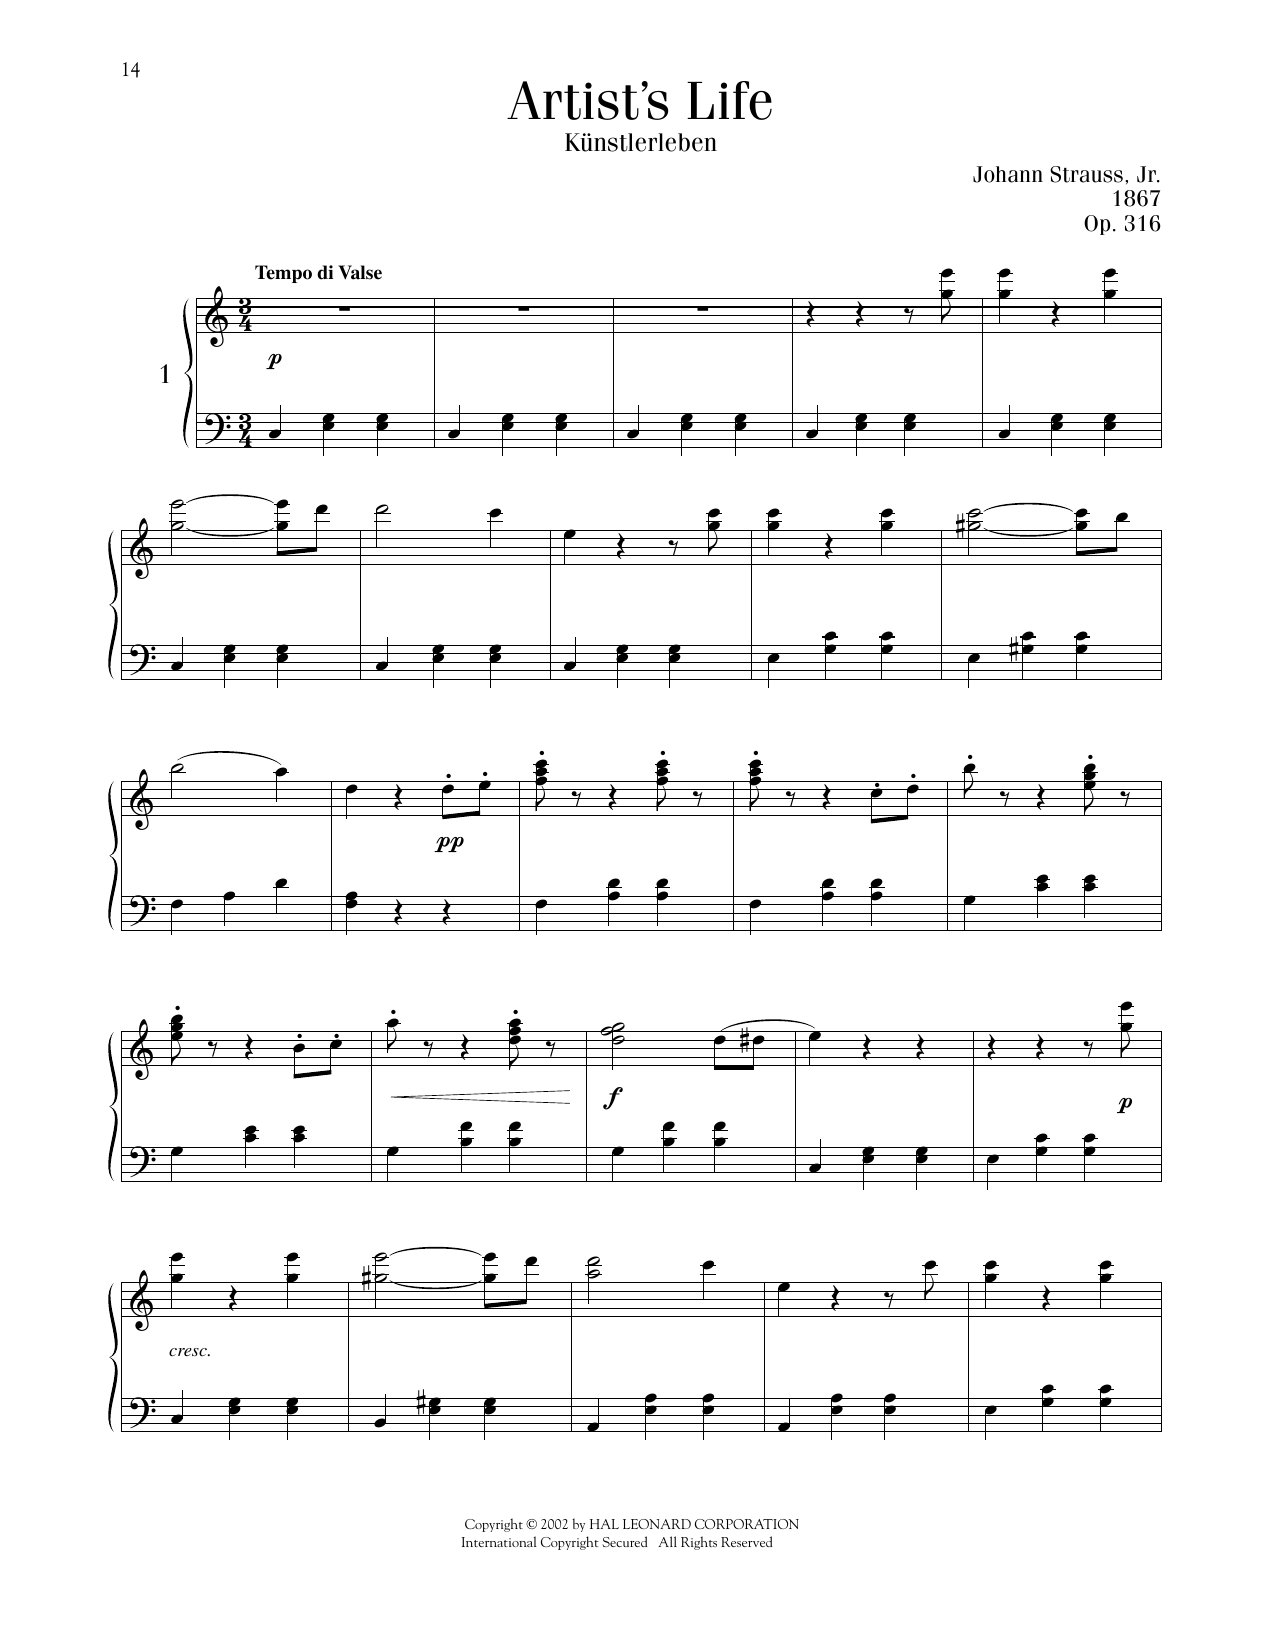 Johann Strauss Artist's Life, Op. 316 sheet music notes printable PDF score